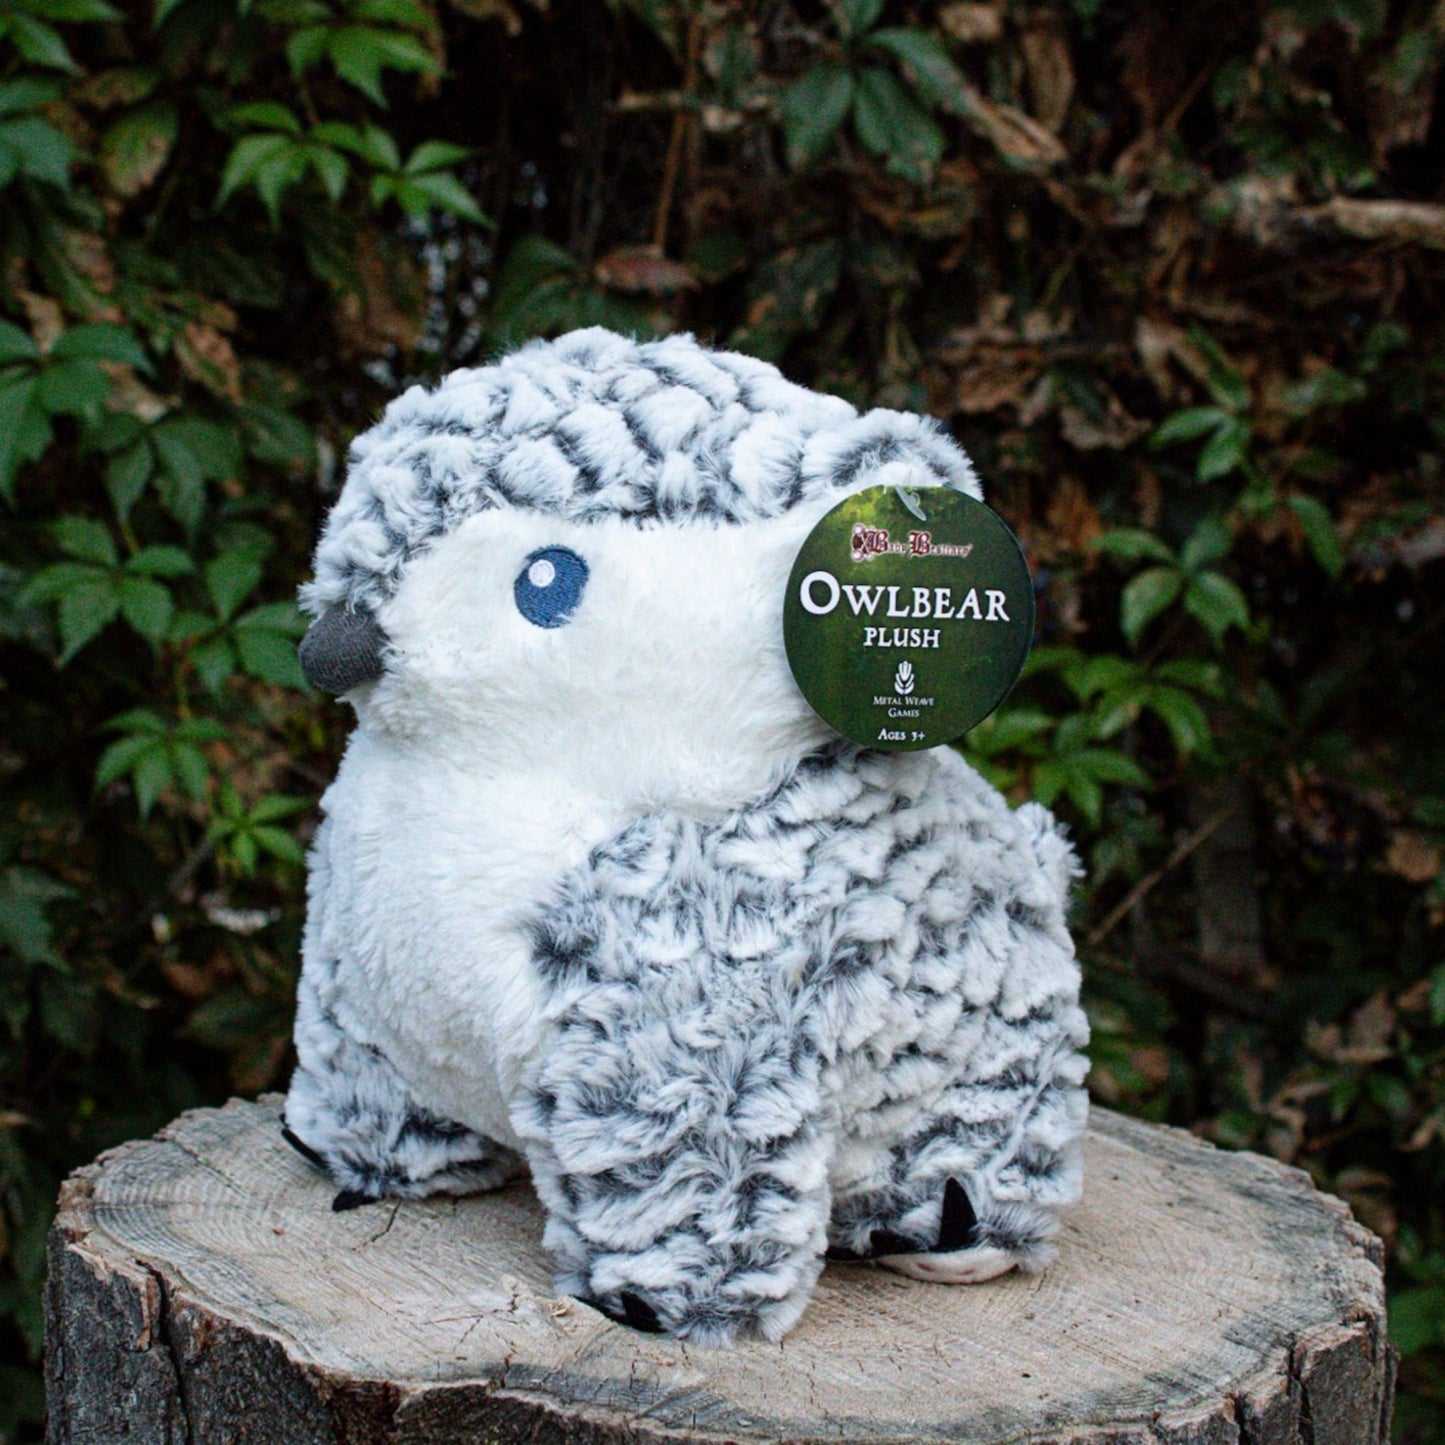 Baby Owl Bear Plush